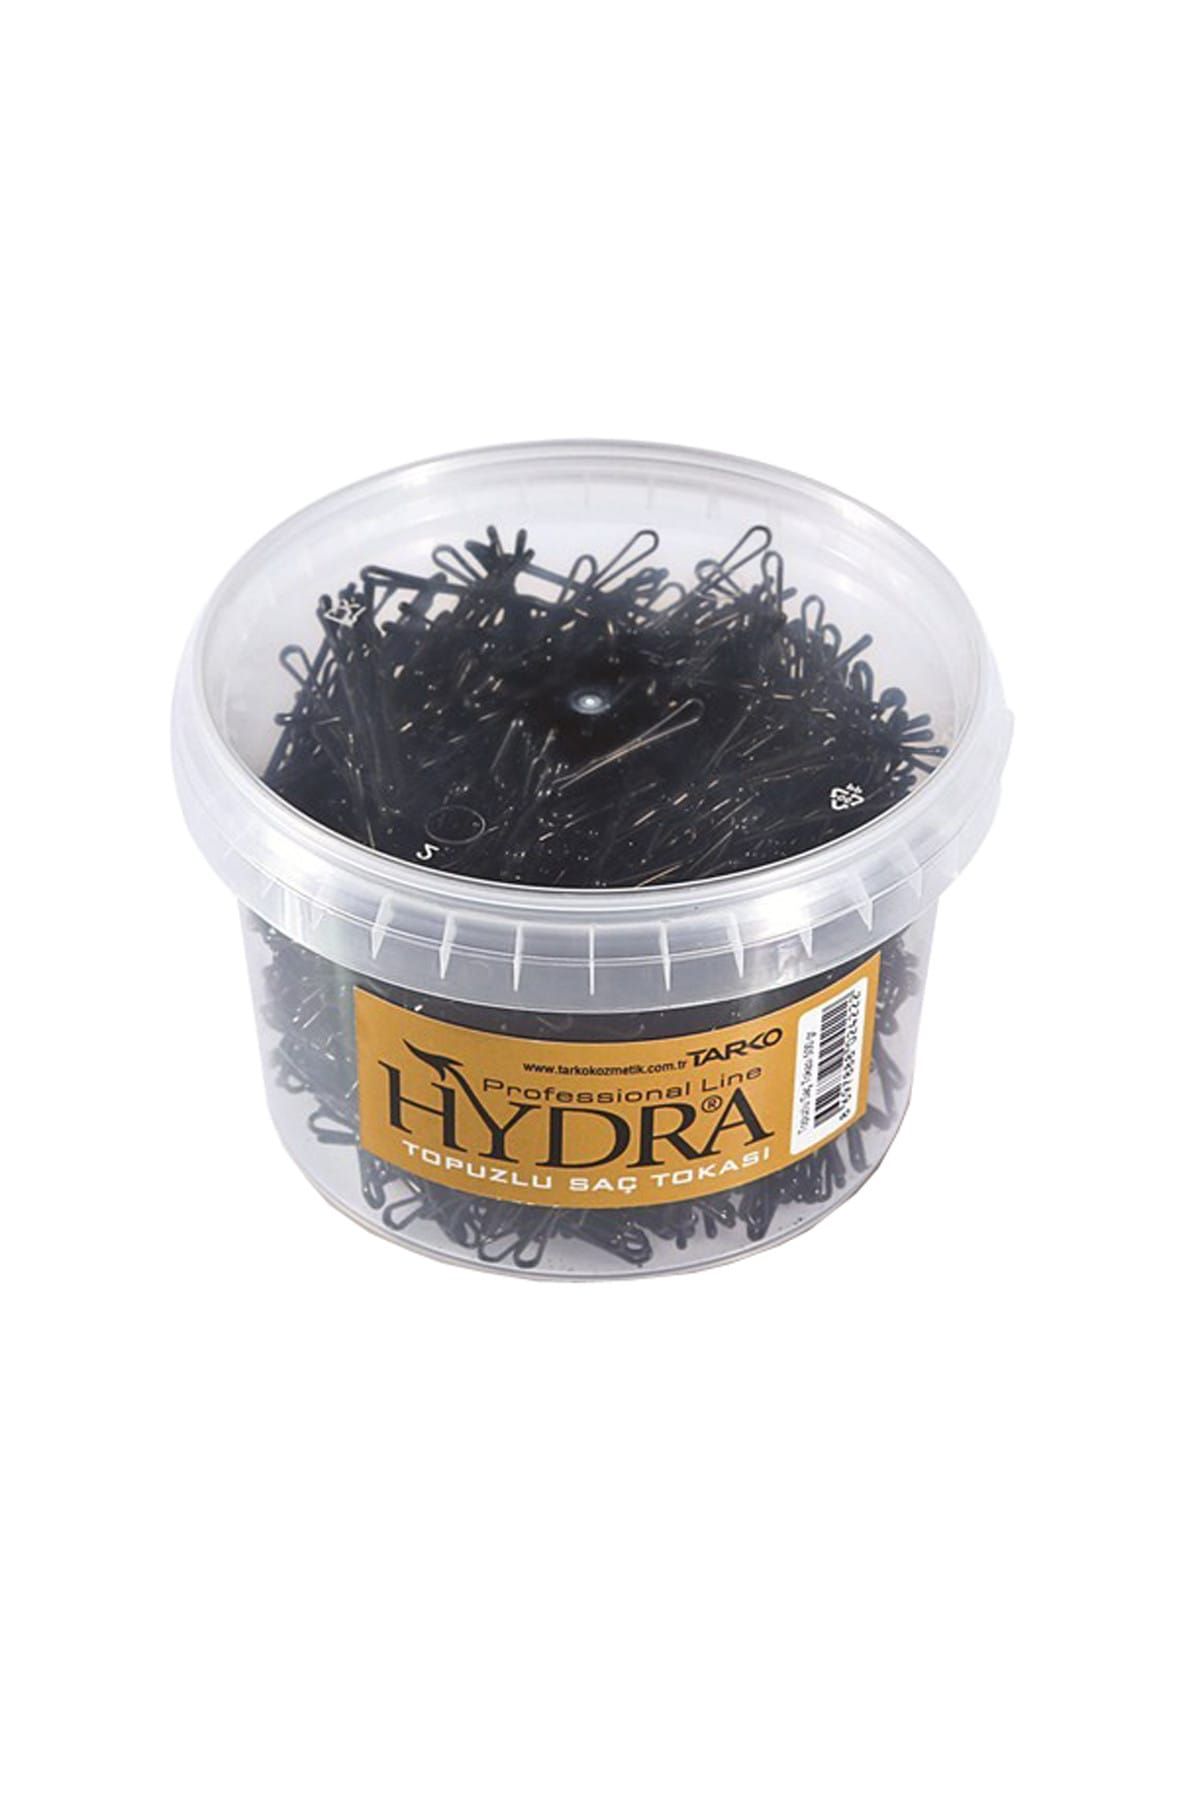 Hydra Topuzlu Saç Tokası - 500 g 8697888024222